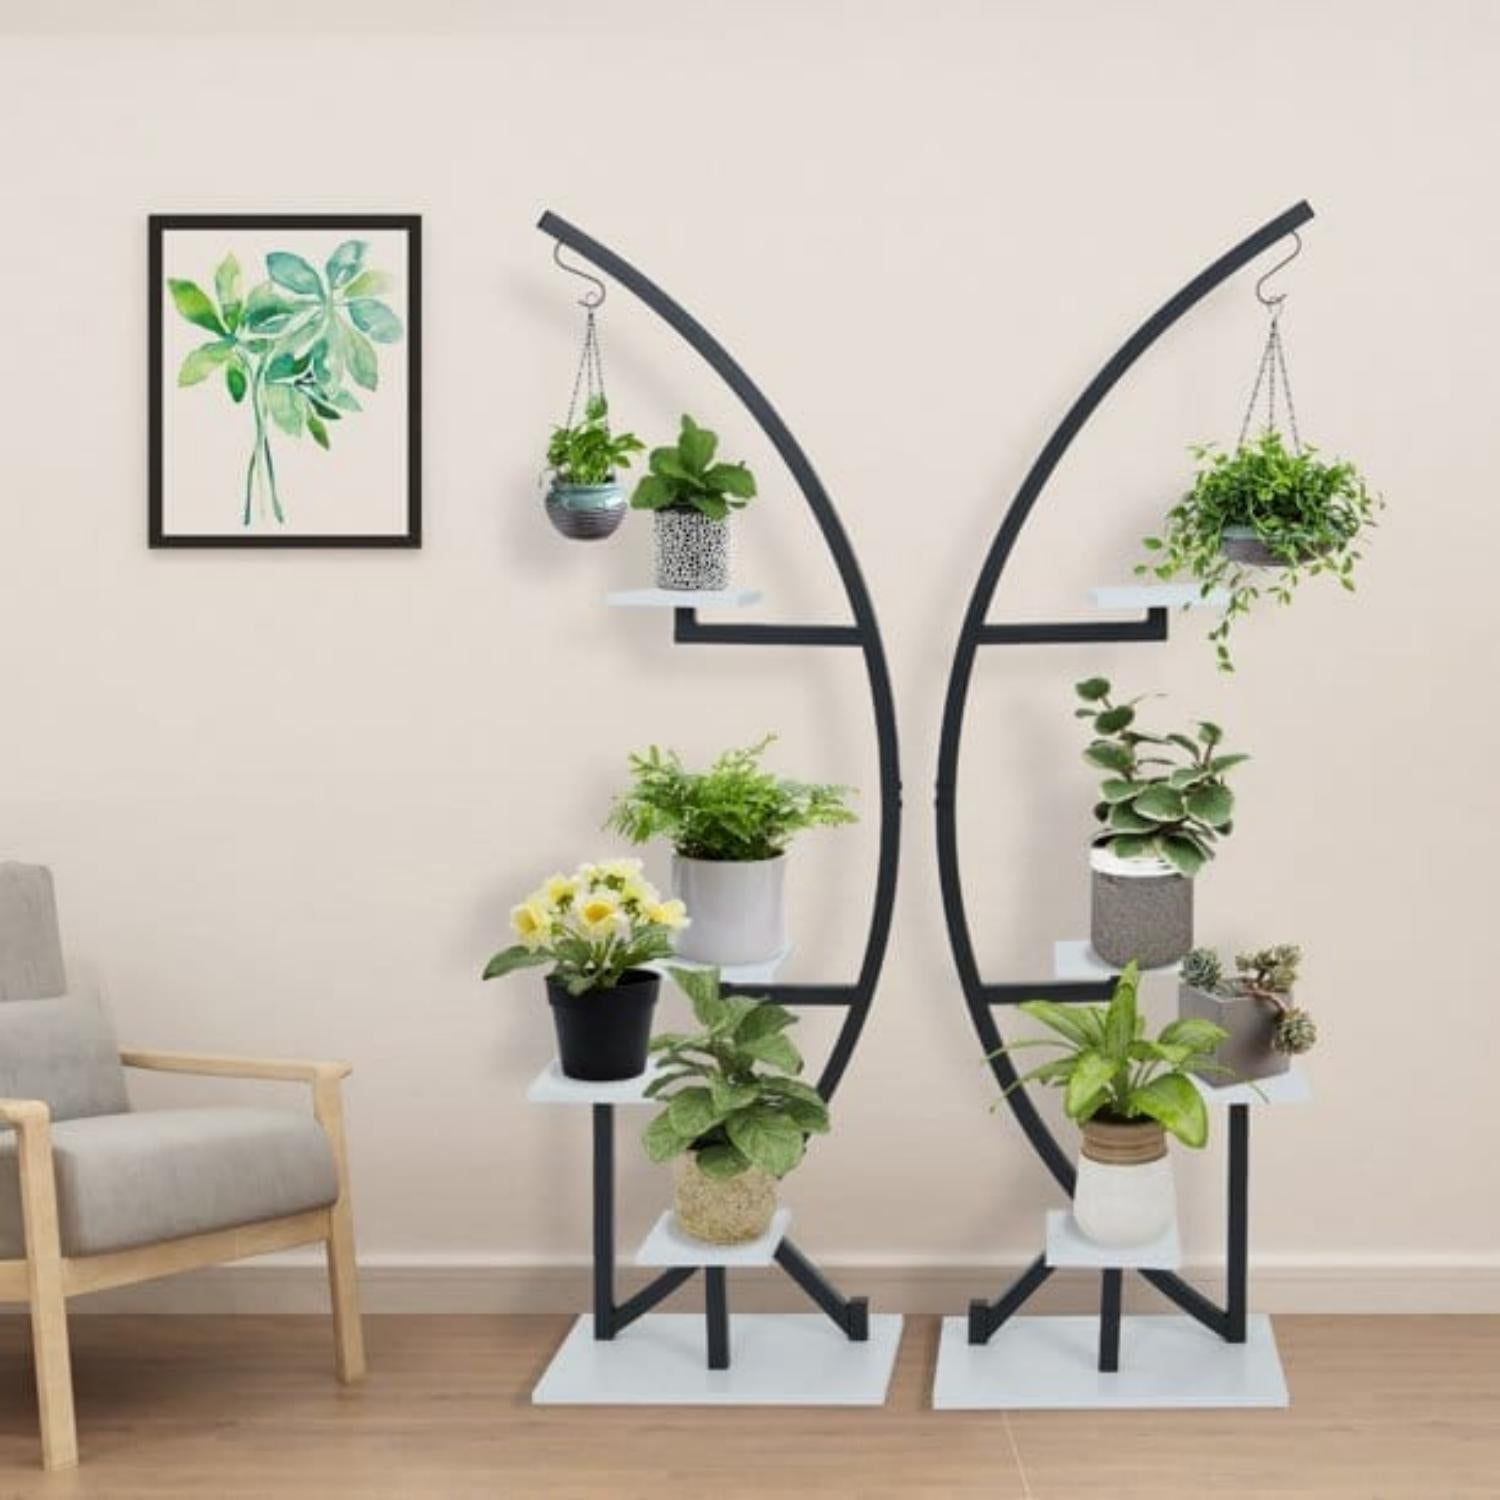 Elecwish Black White Plant Stand Indoor,2 PCS 5 Tier Half Moon Plant Shelf displays in the livingroom